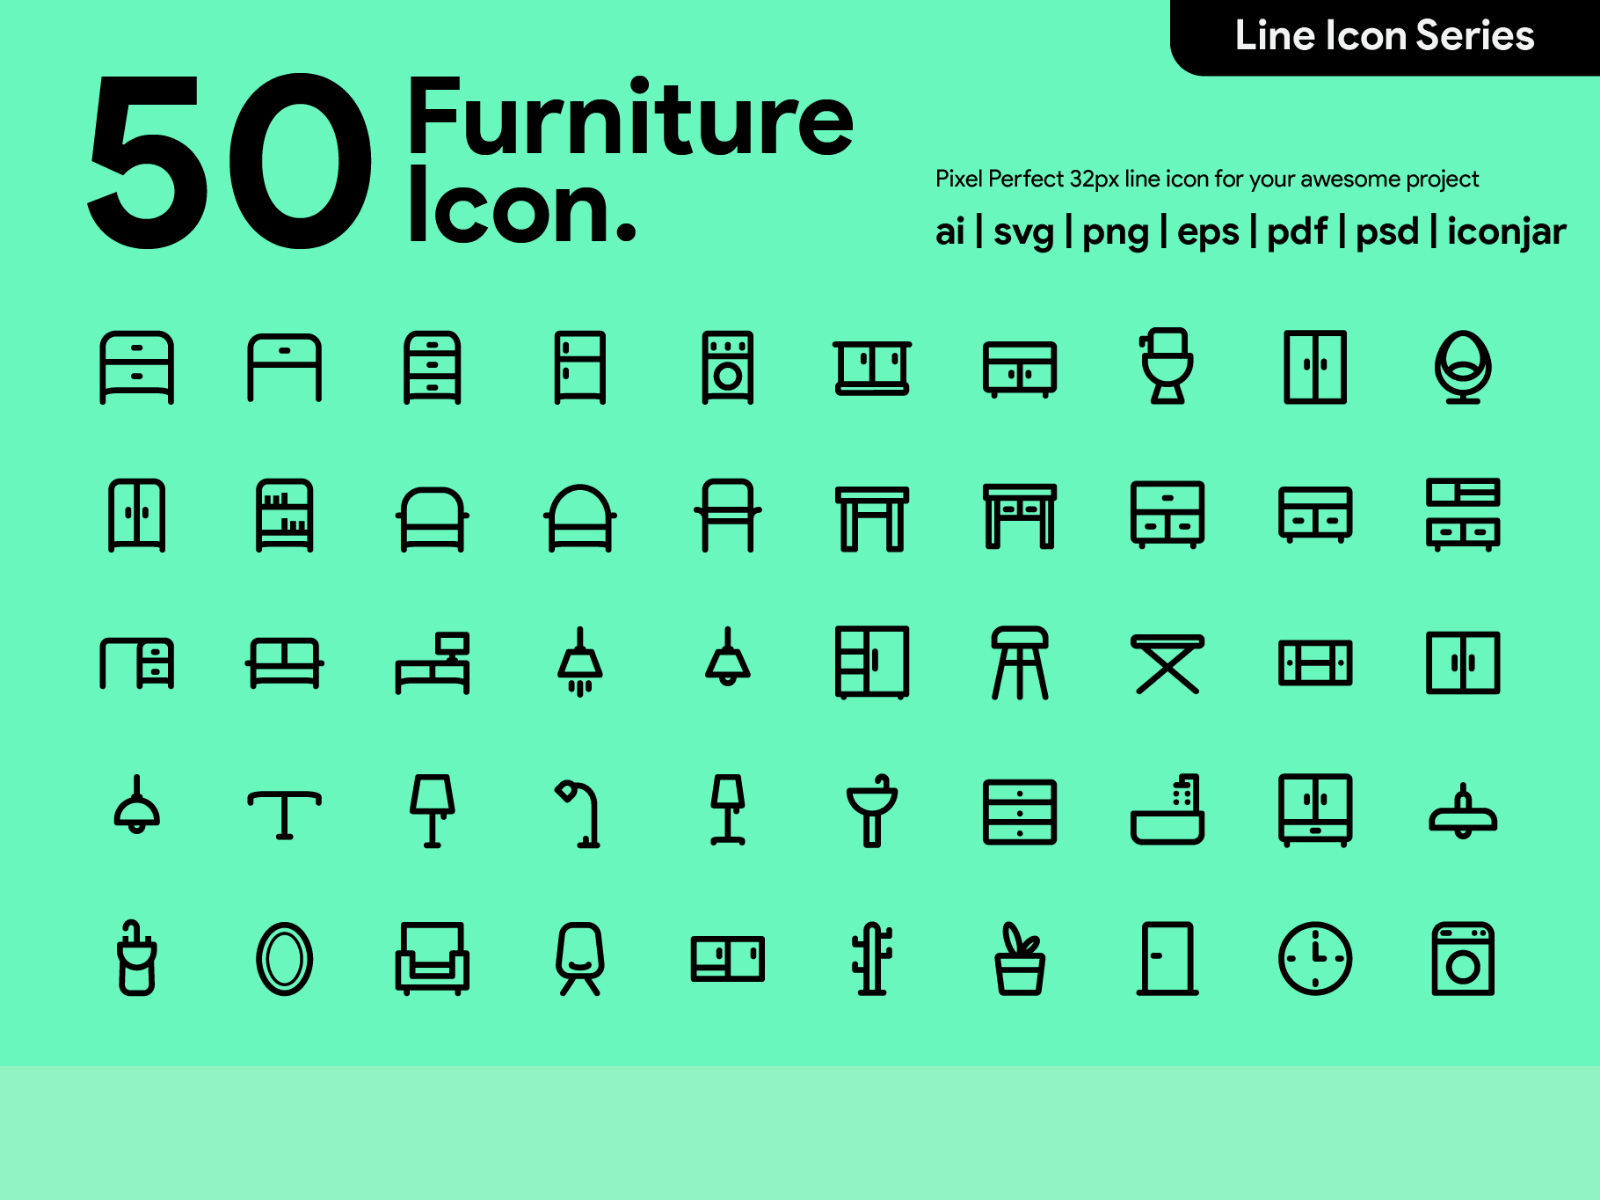 App icons design idea #239: Kawaicon - 50 Furniture Line icon